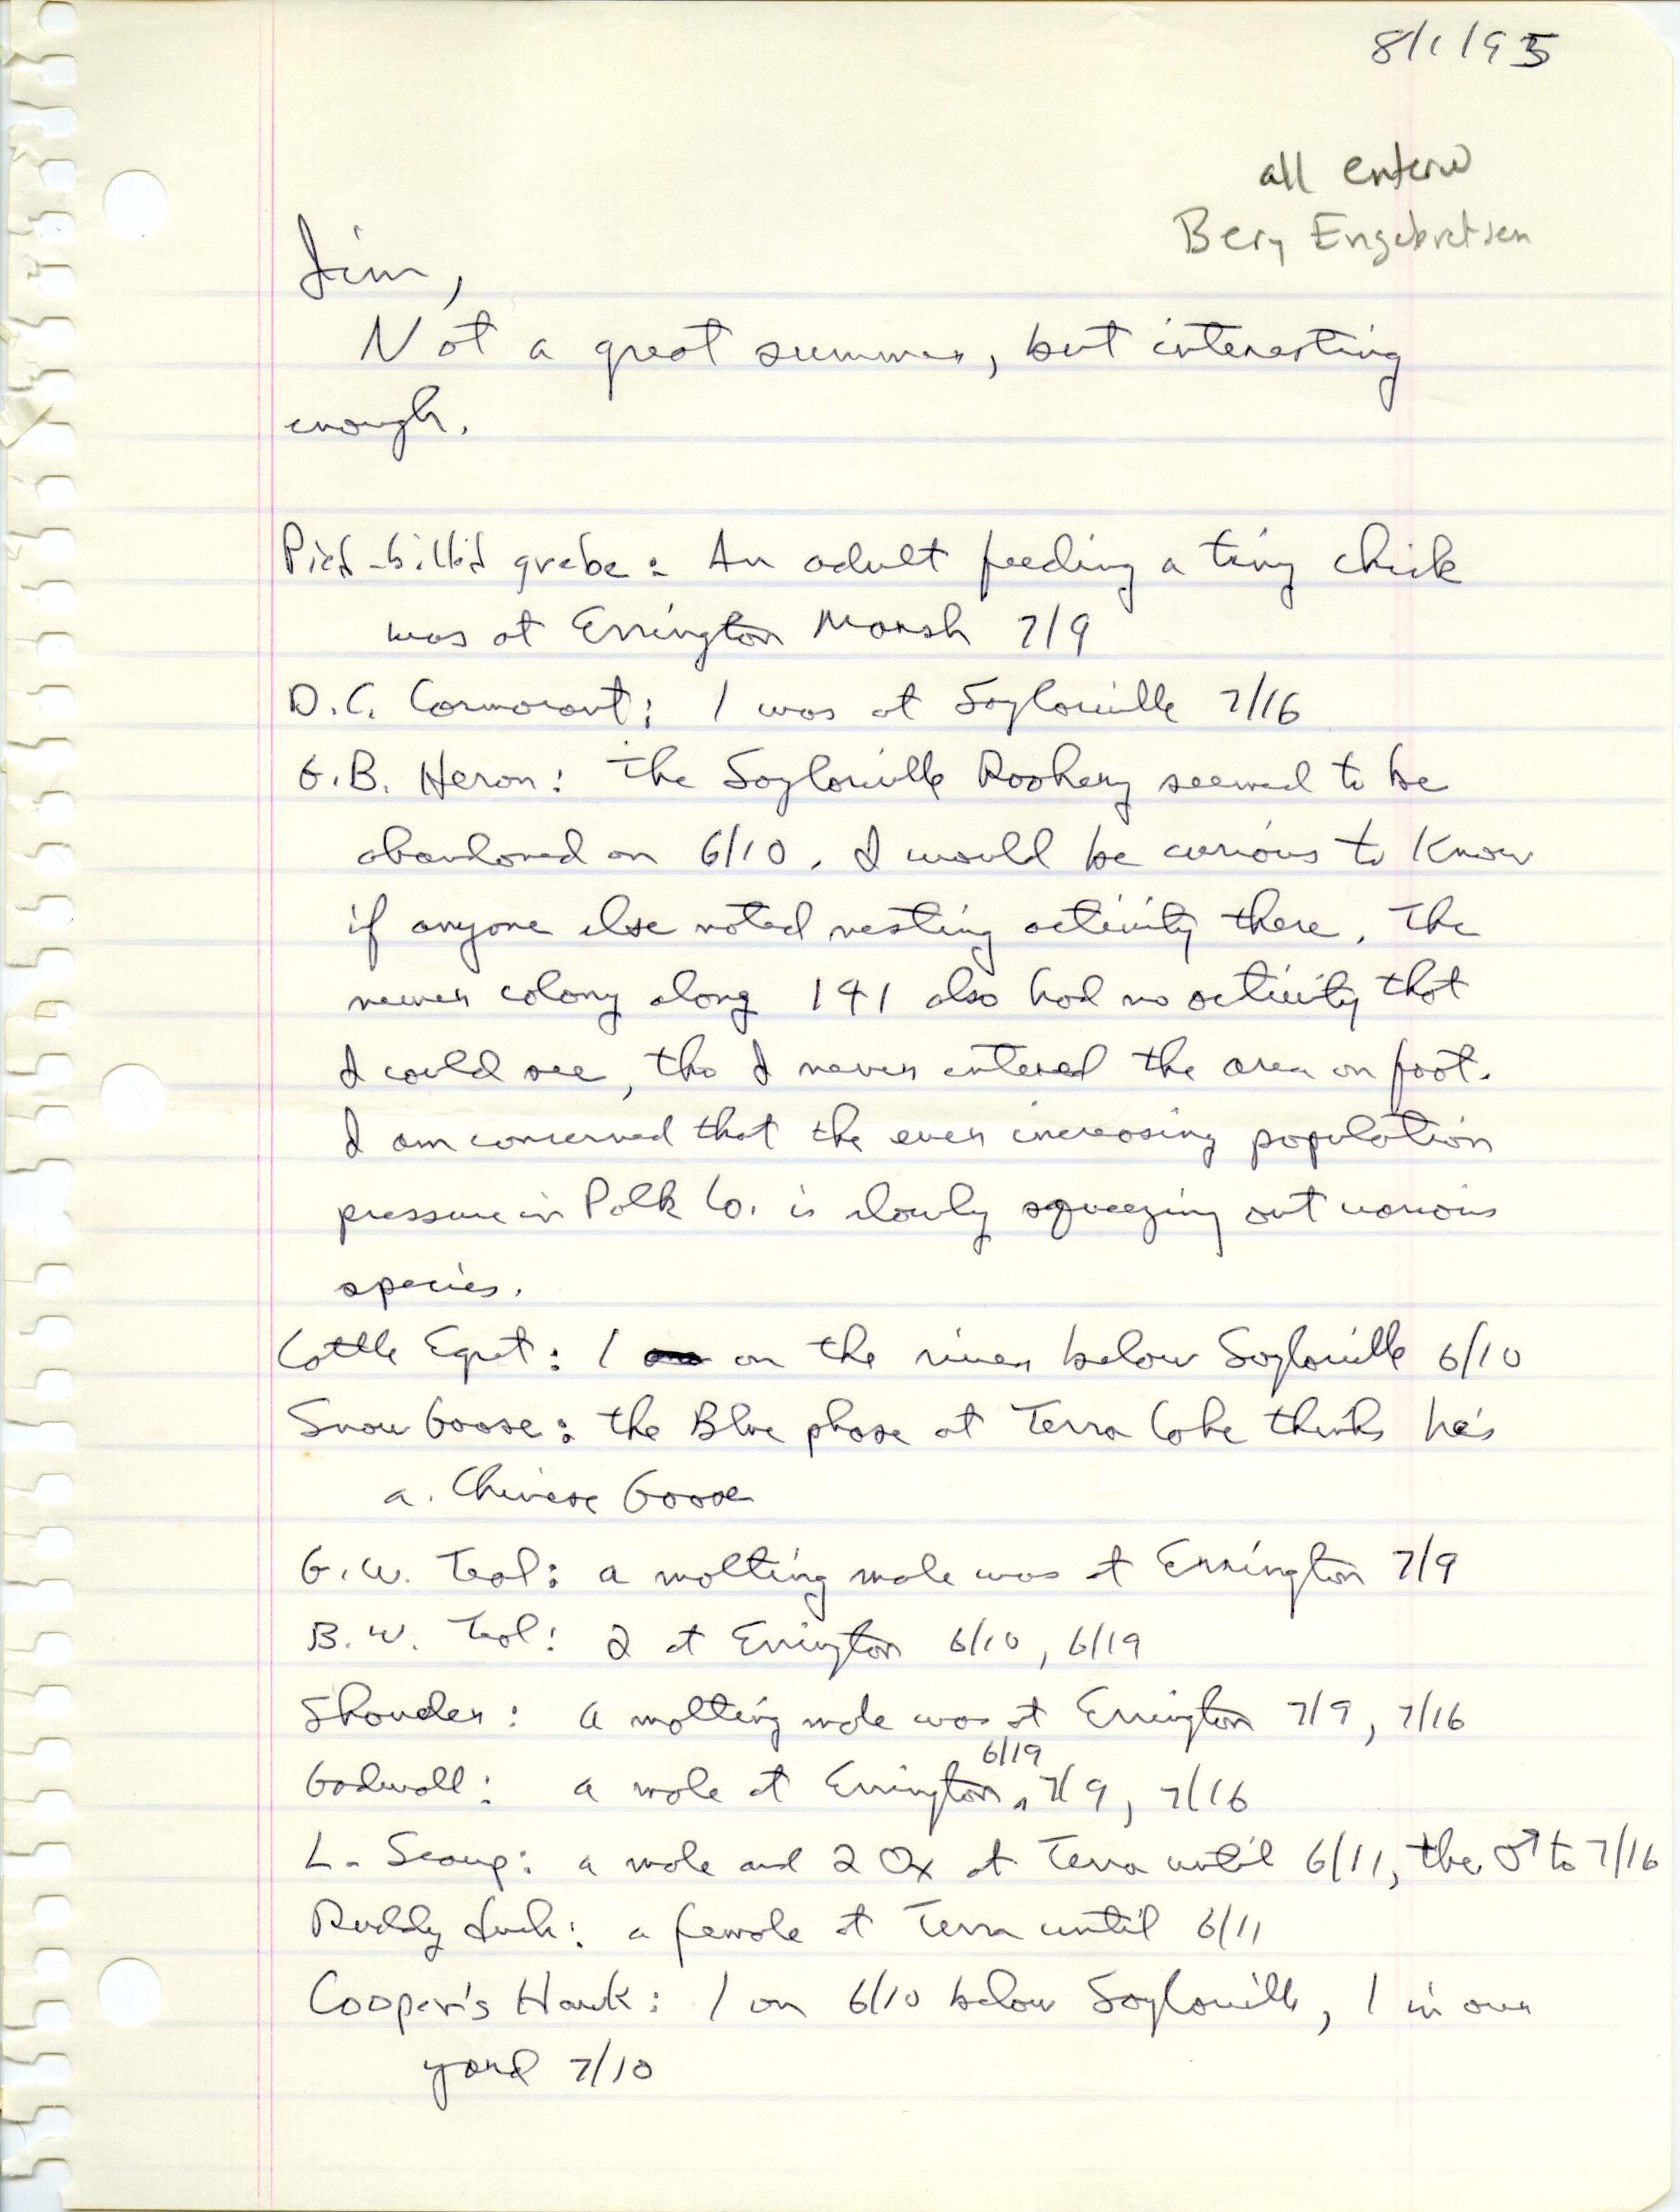 Bery Engebretsen letter to Jim Dinsmore regarding summer bird sightings, August 1, 1995